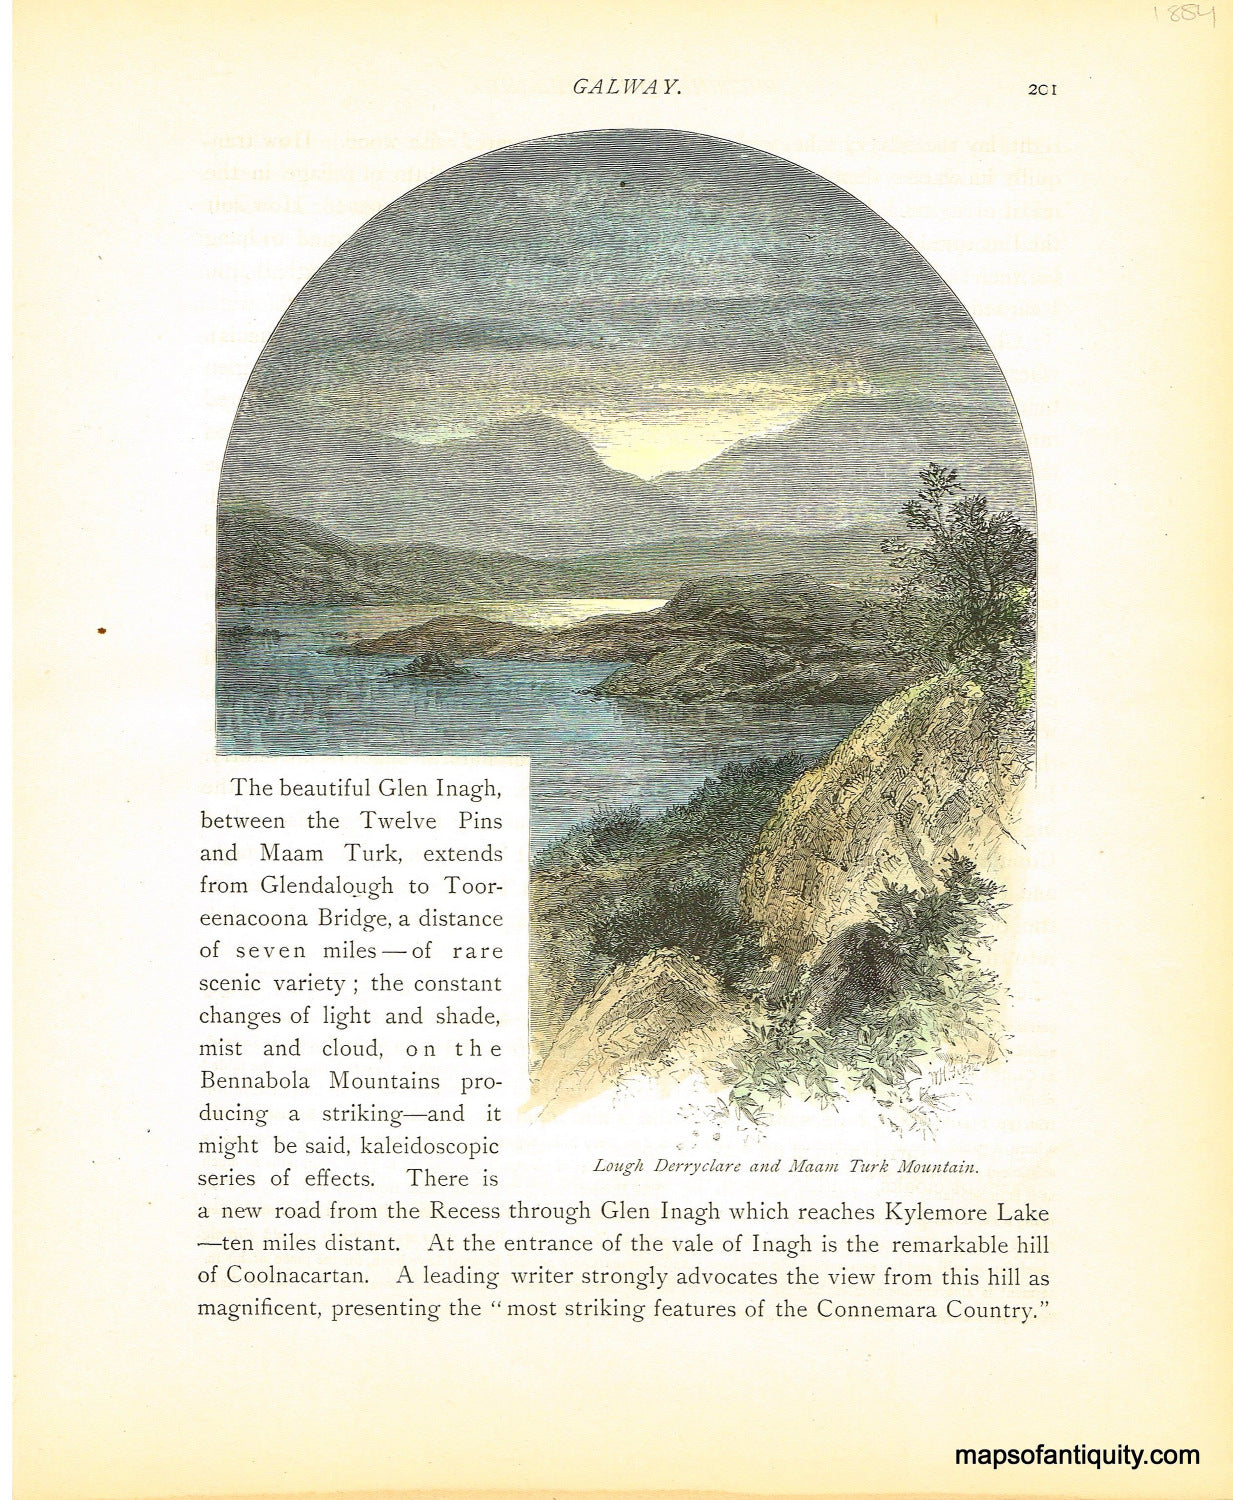 Print-Galway-Europe-United-Kingdom-1884-Kelly-Maps-Of-Antiquity